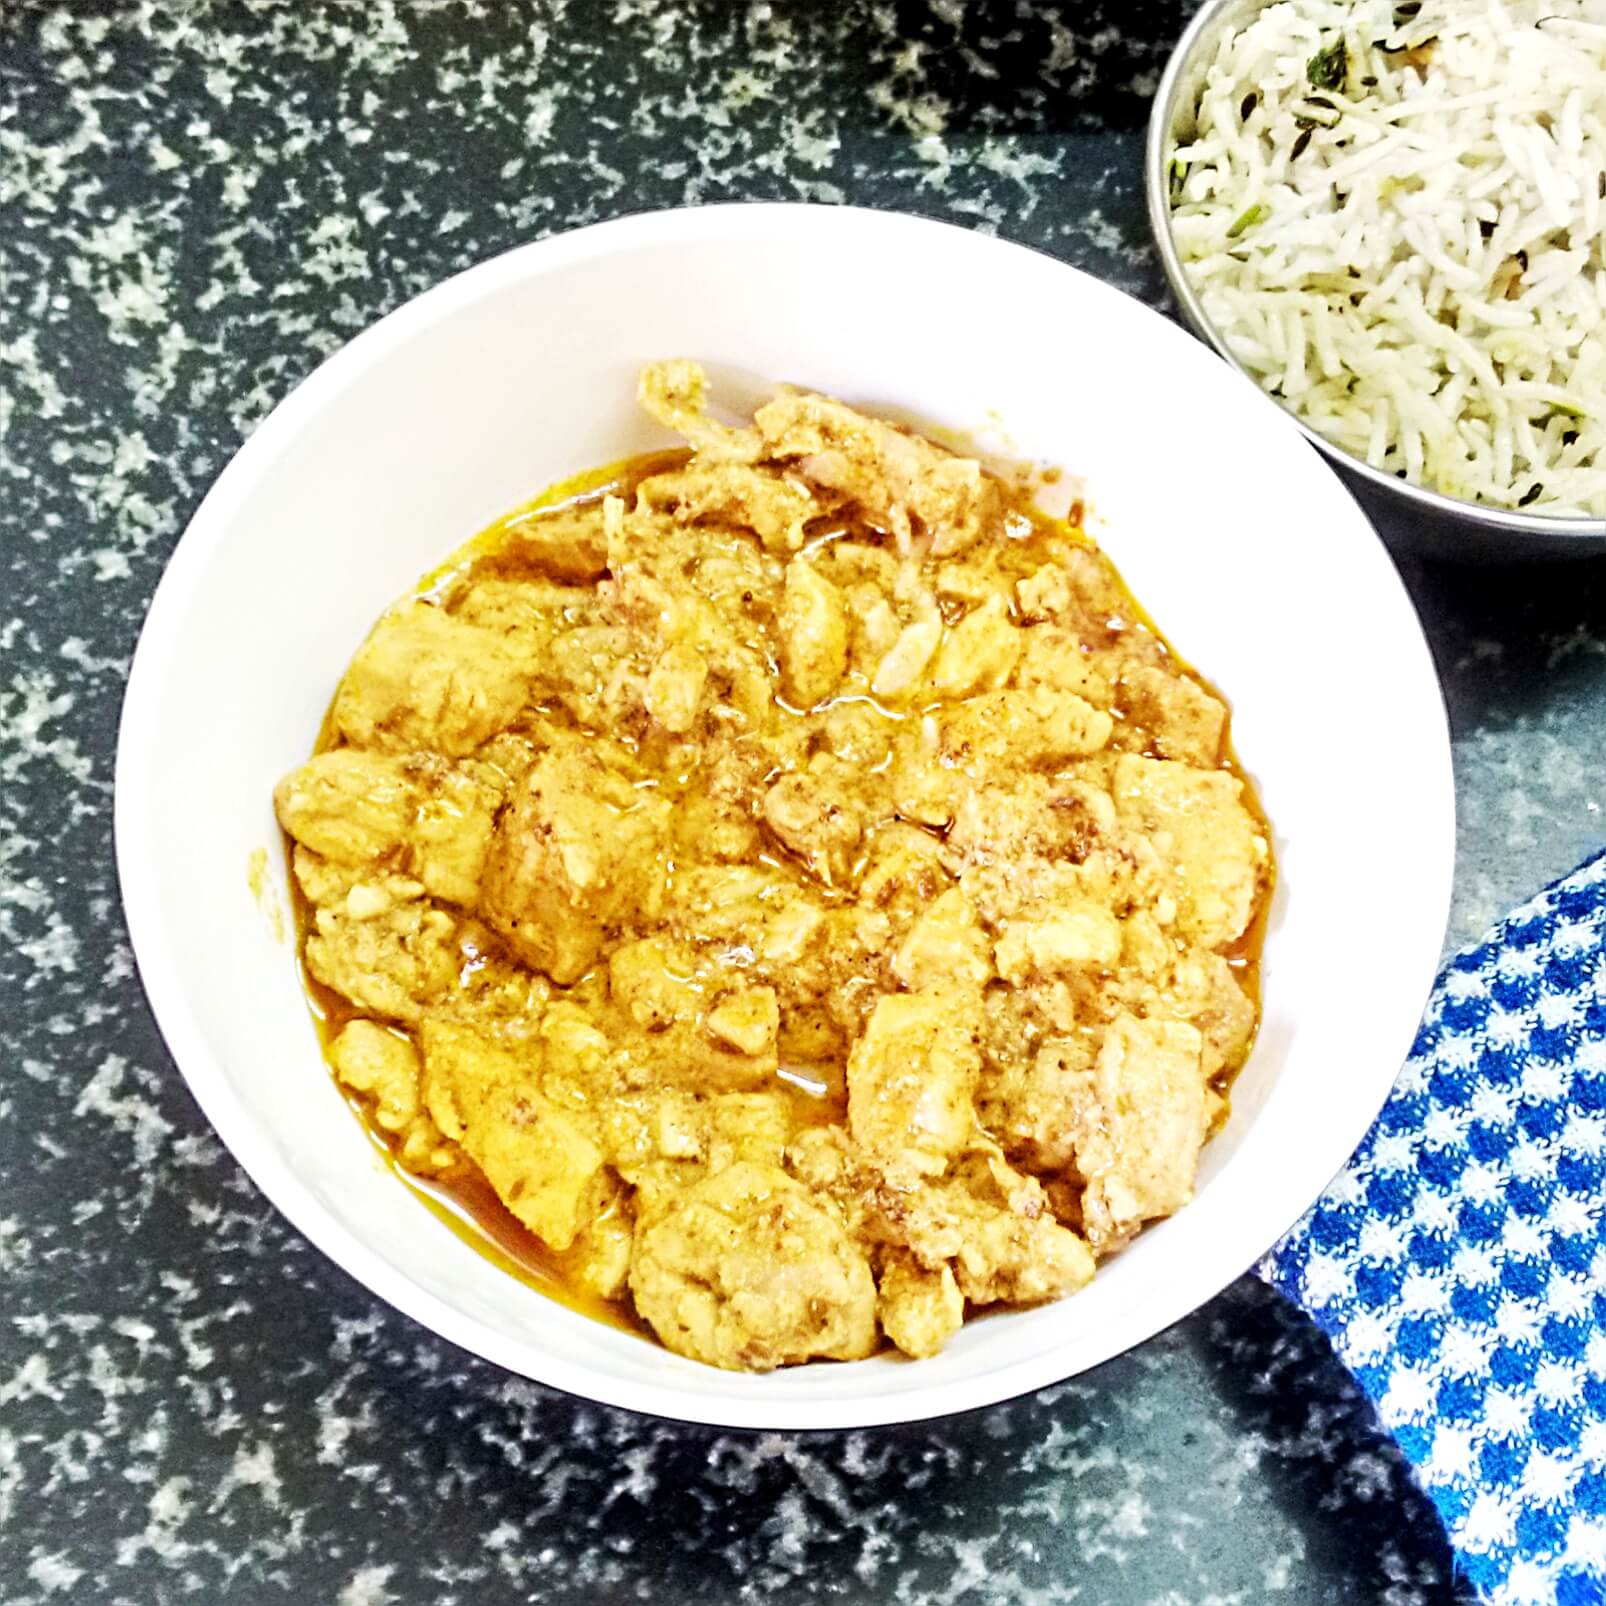 murgh lasooni - chicken garlic curry